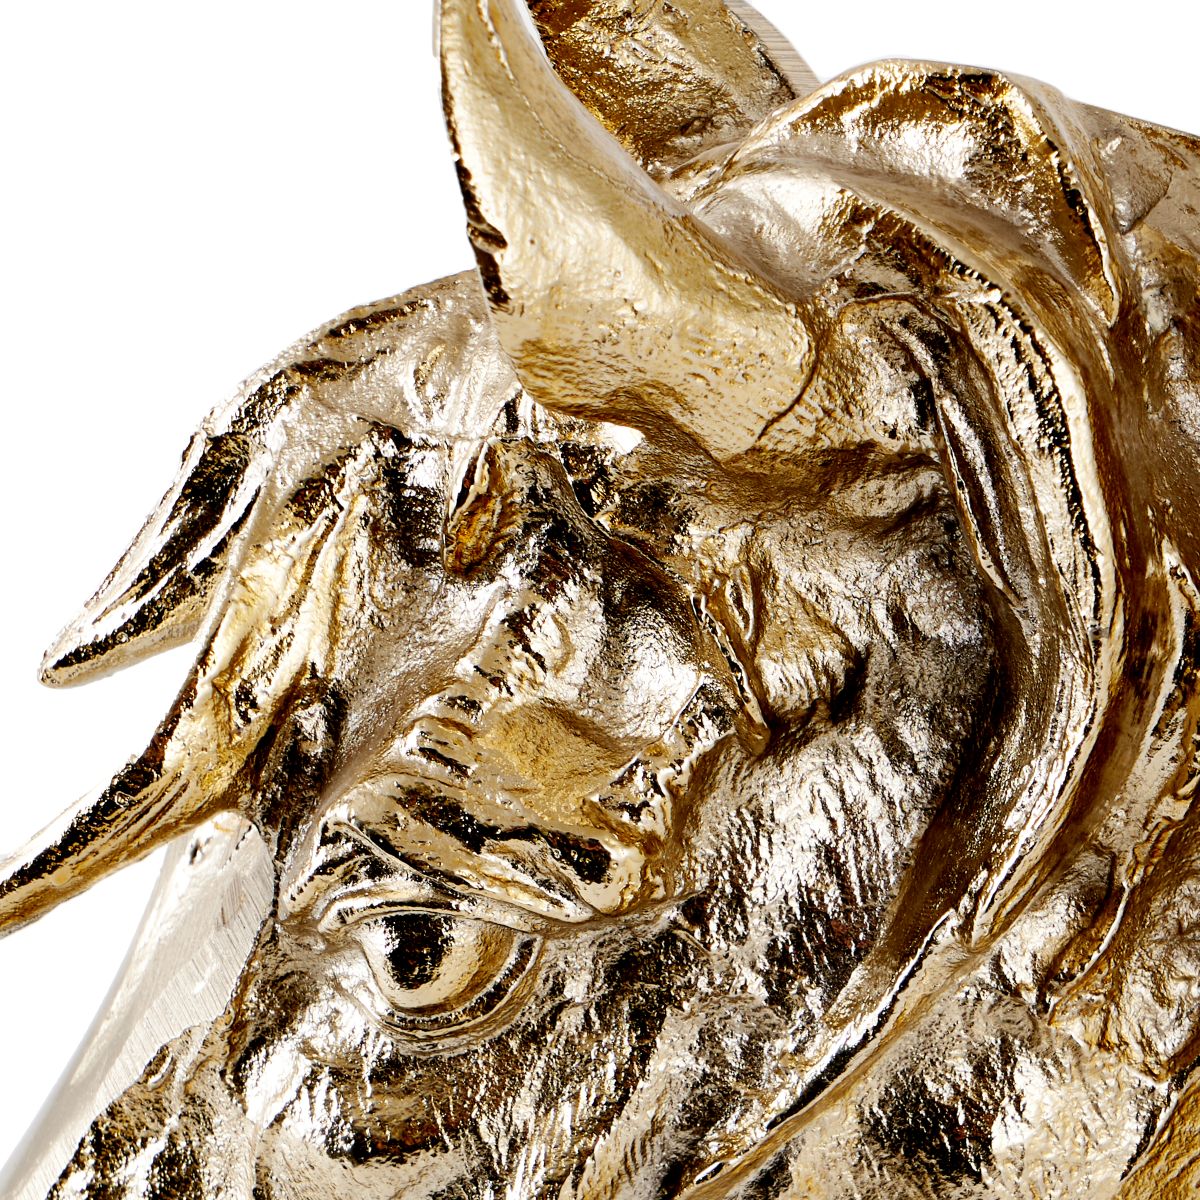 Shiny Gold Horse Head Ornament